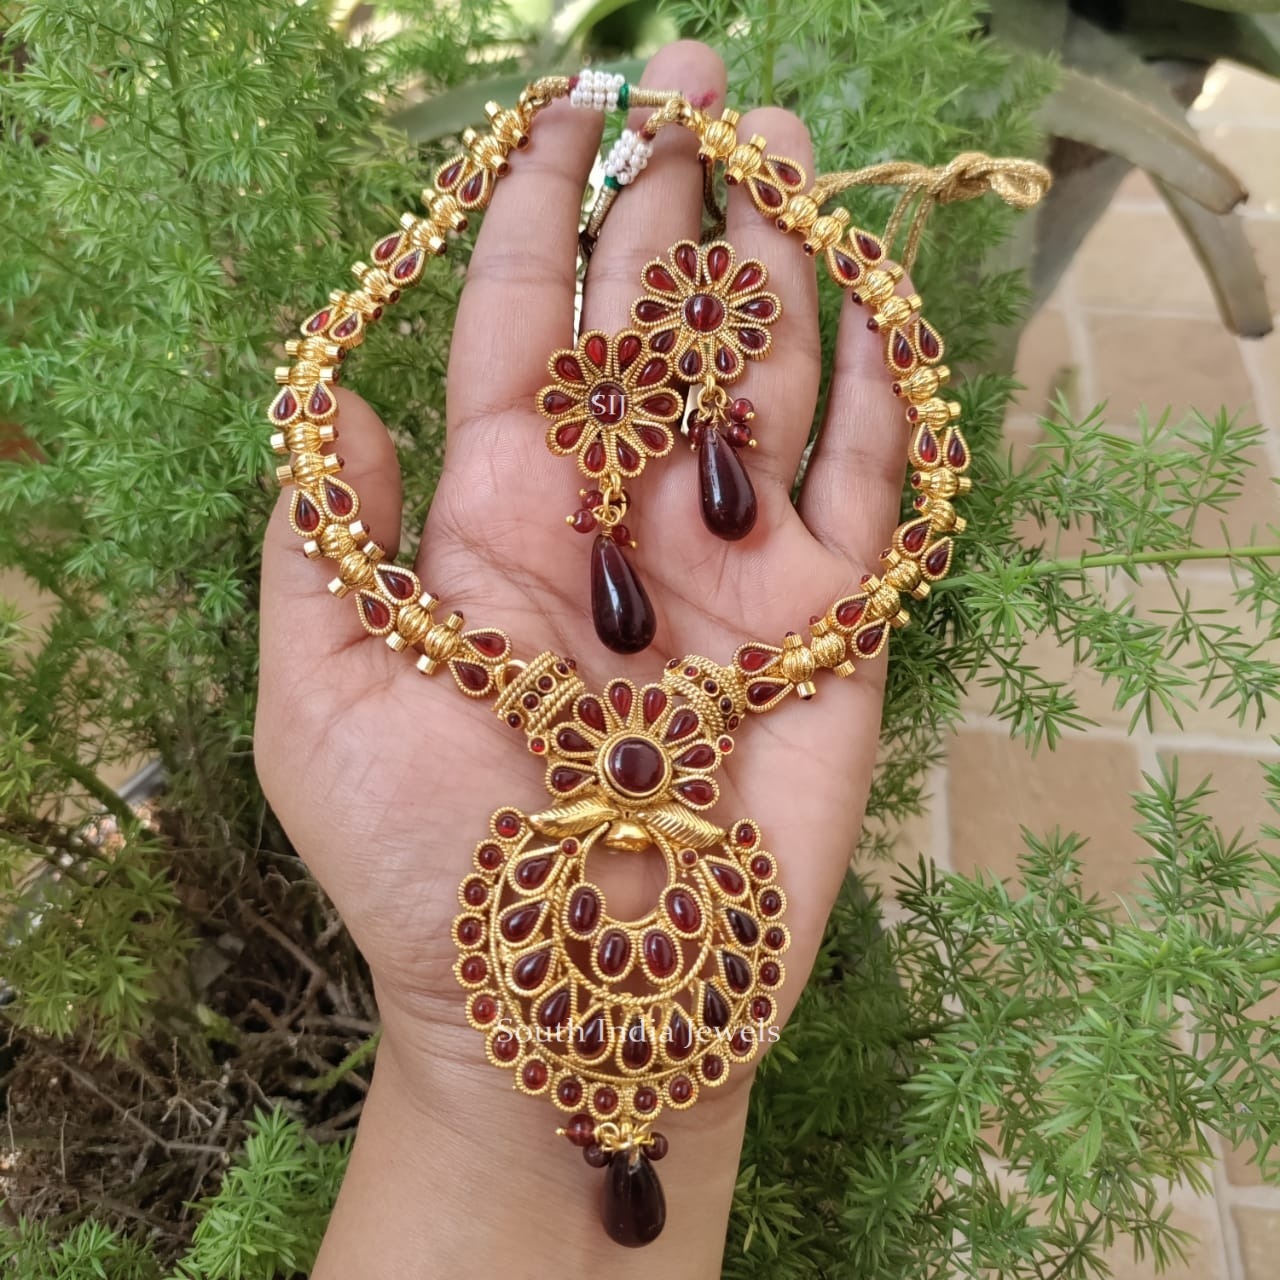 Floral Design Necklace